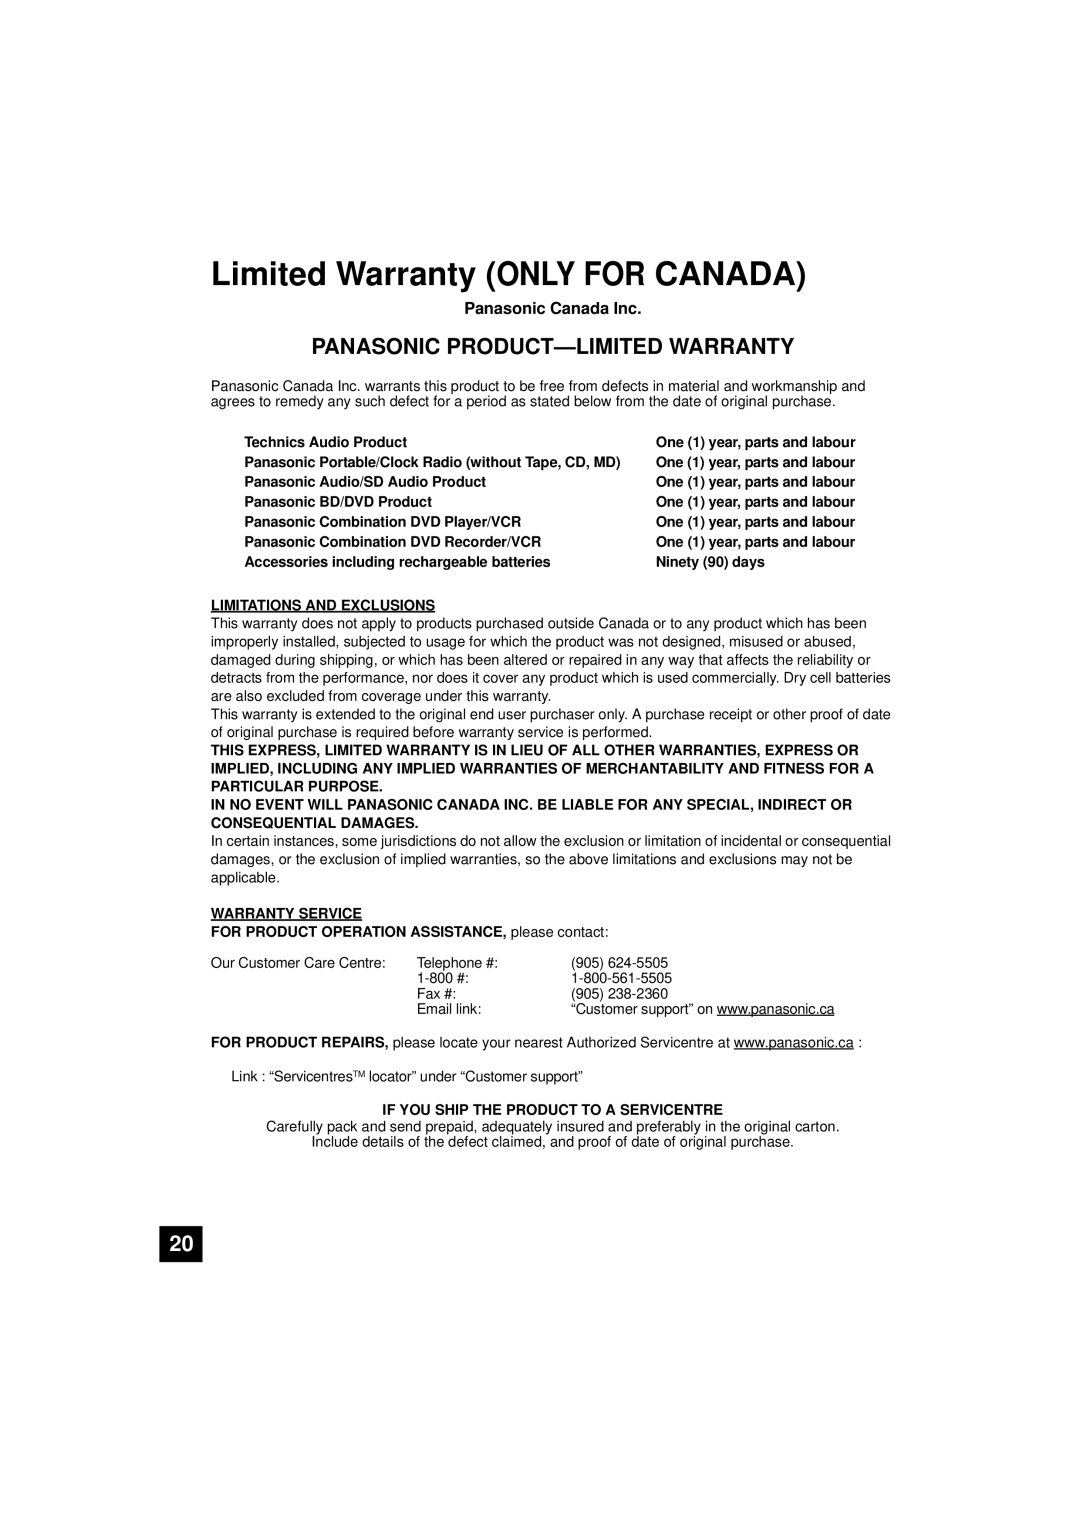 Panasonic SC-HTB10, RQTX1165-1P Limited Warranty ONLY FOR CANADA, Panasonic Product-Limitedwarranty, Panasonic Canada Inc 